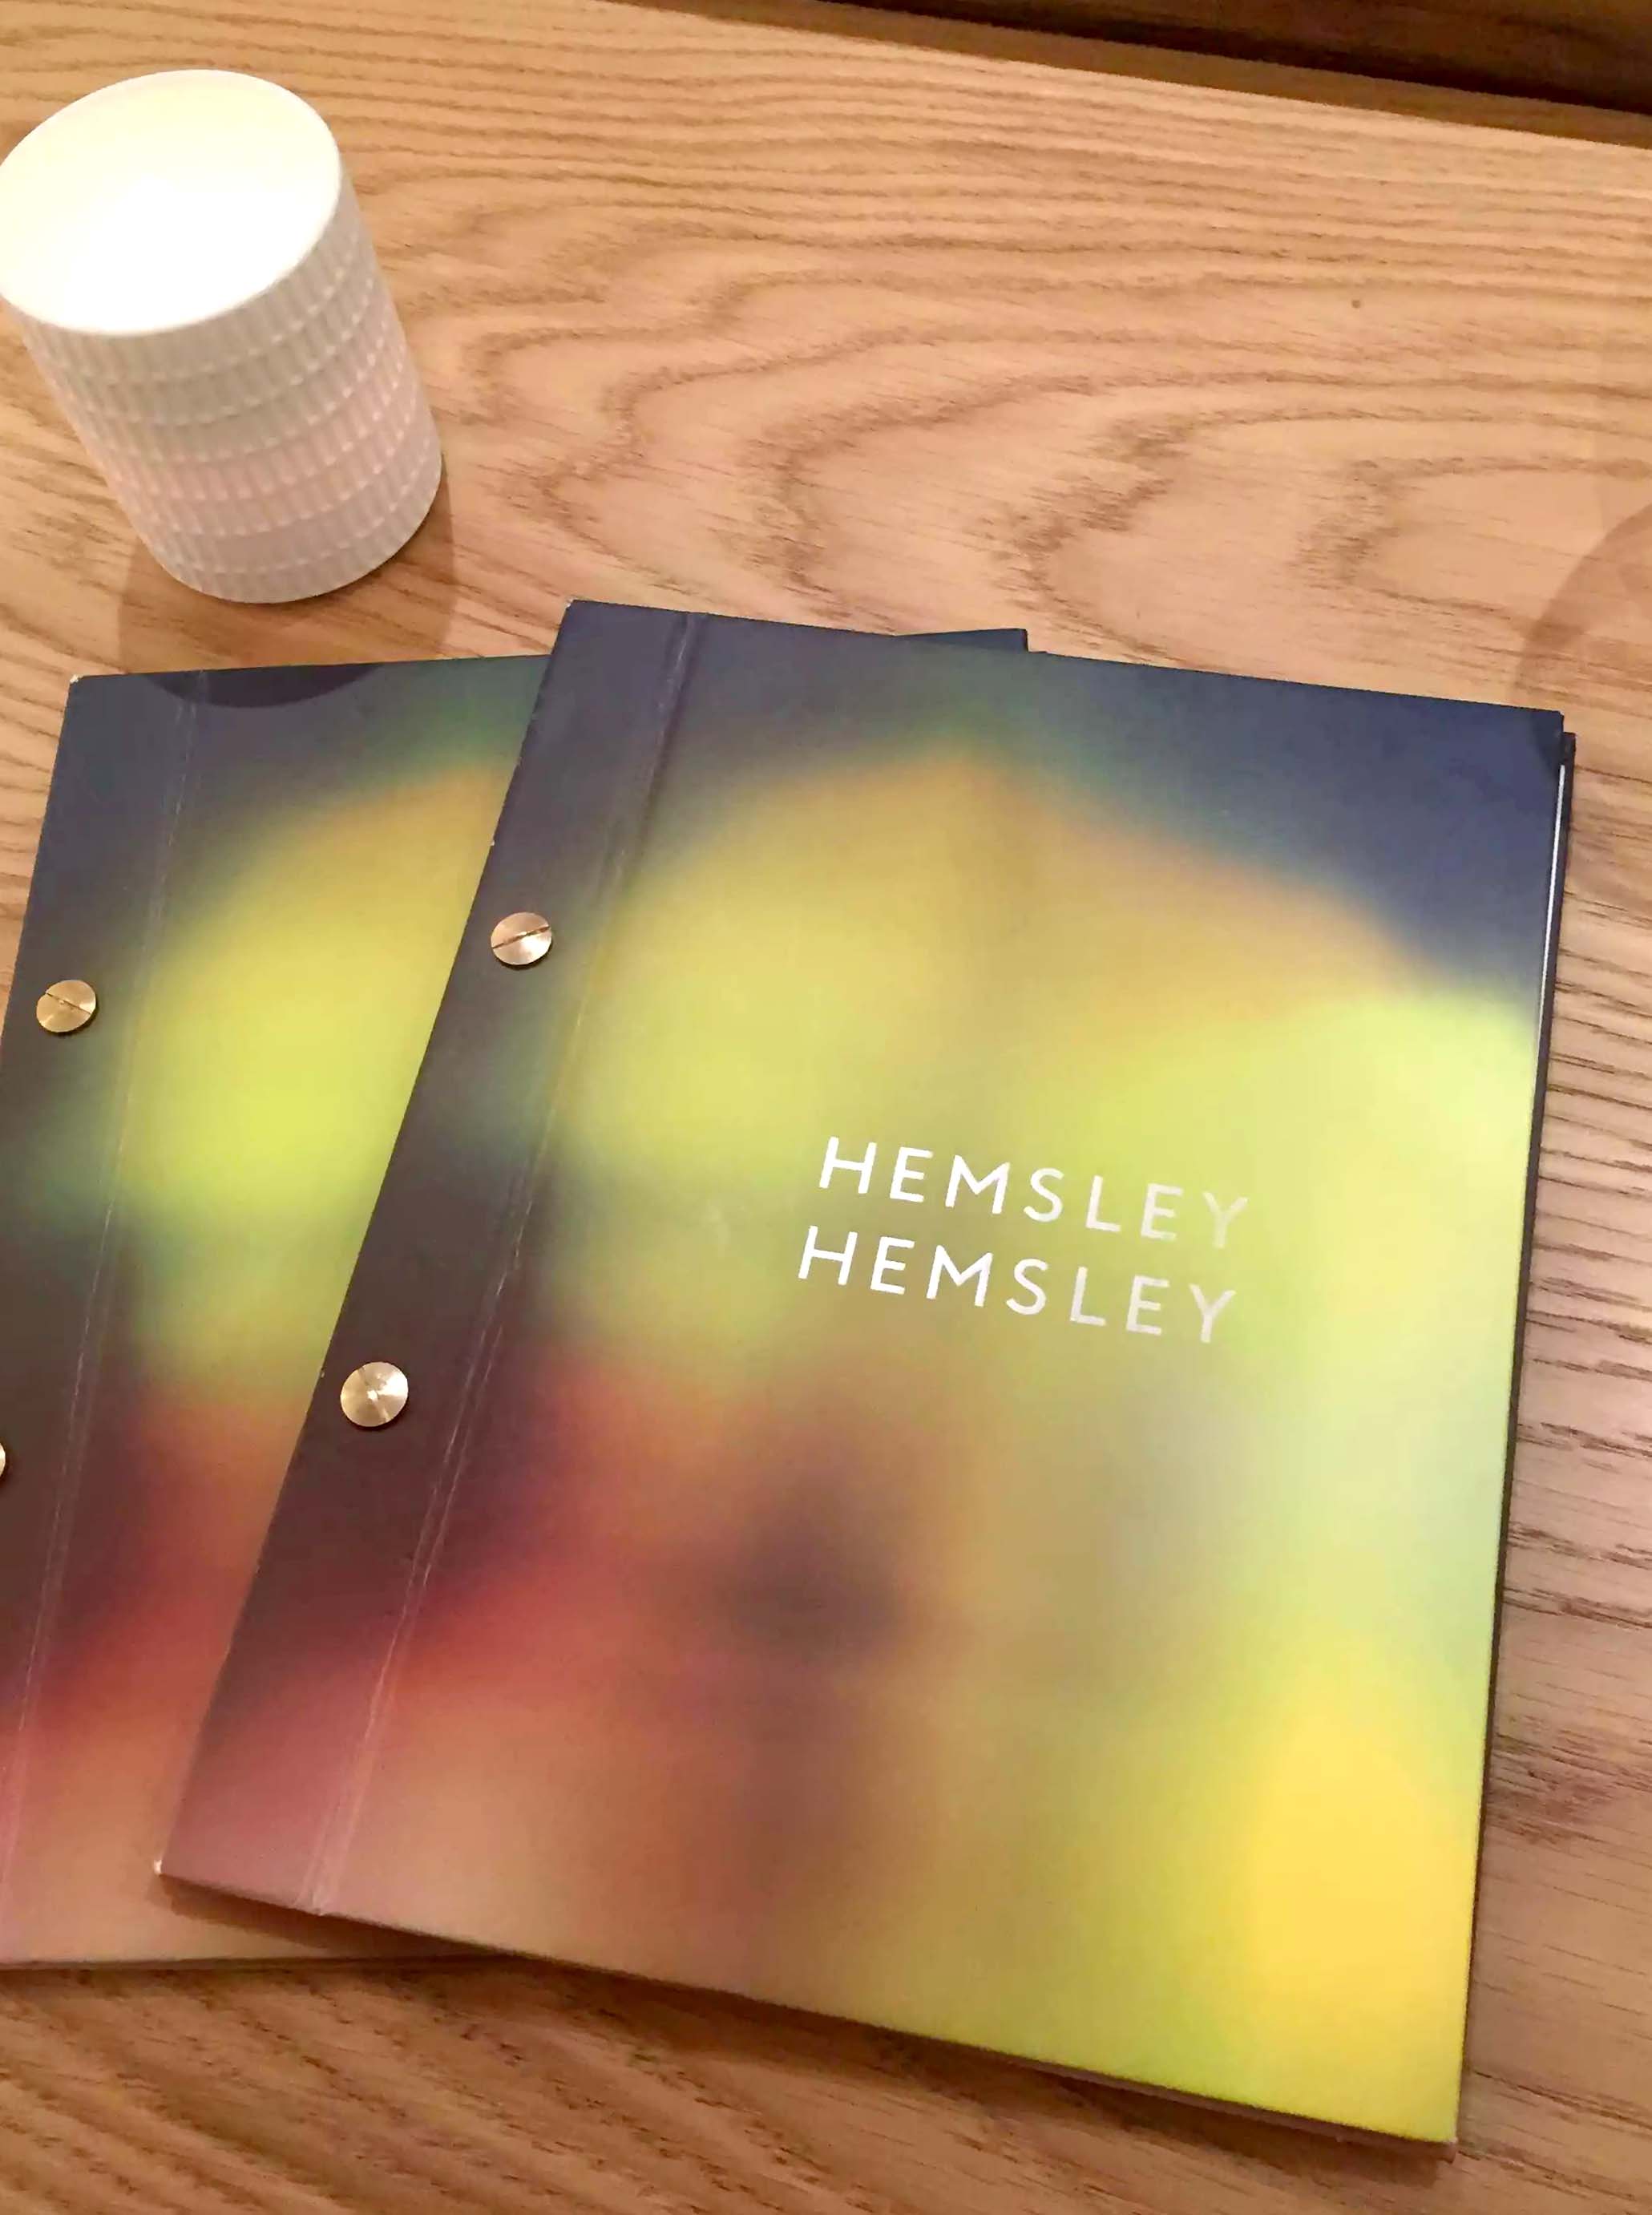 Hemsley And Hemsley Cafe, Selfridges, London